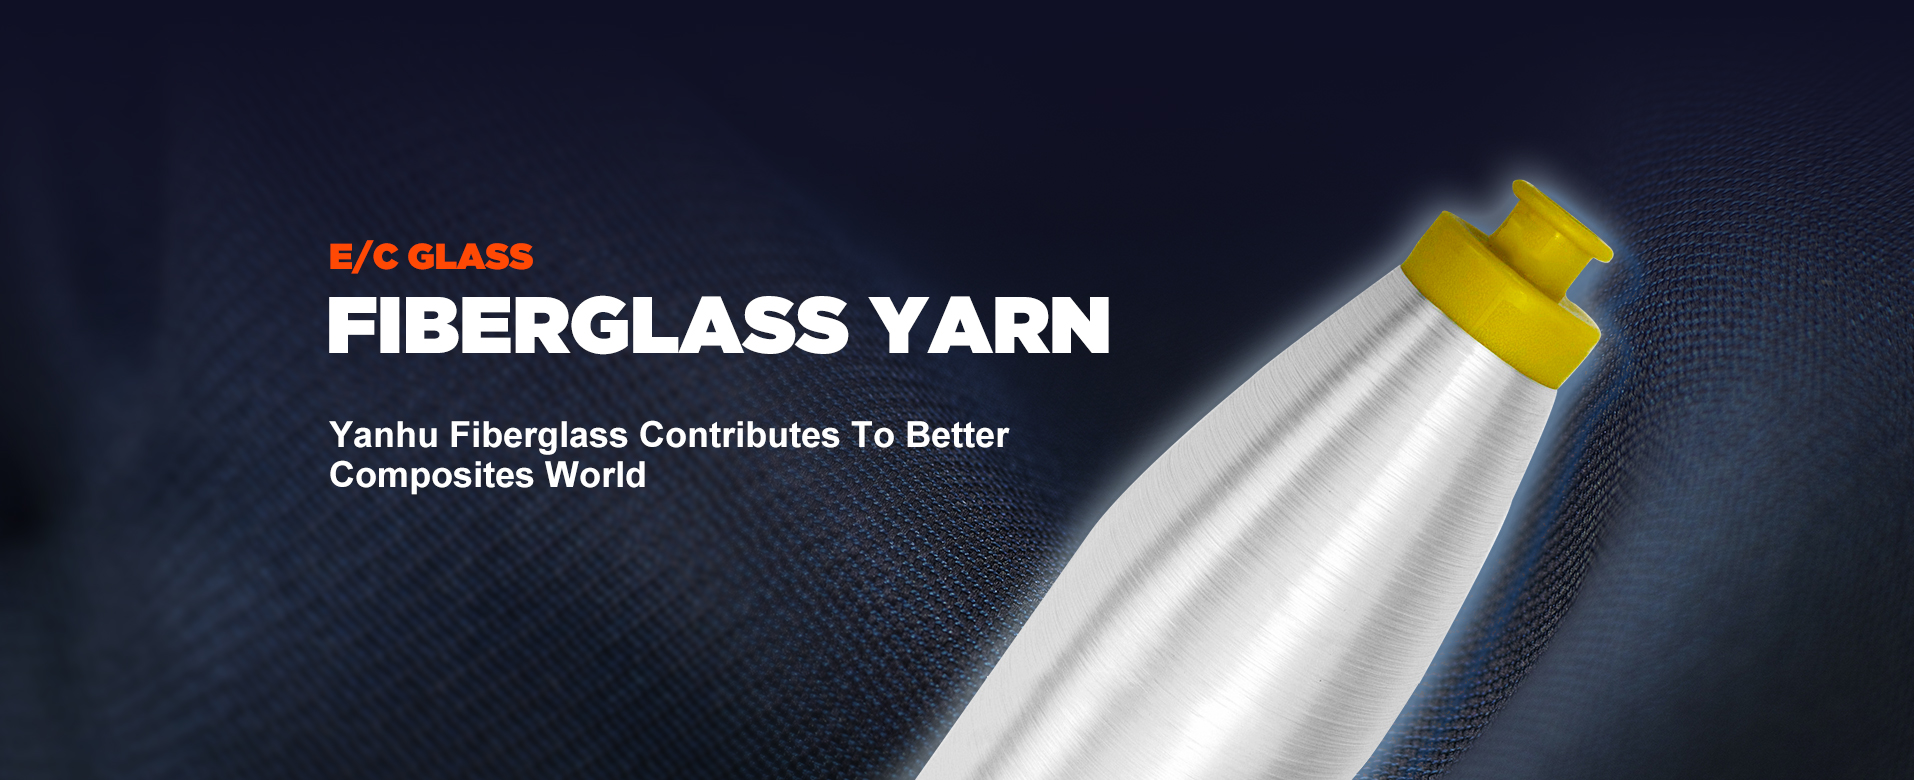 e/c glass fiberglass yarn